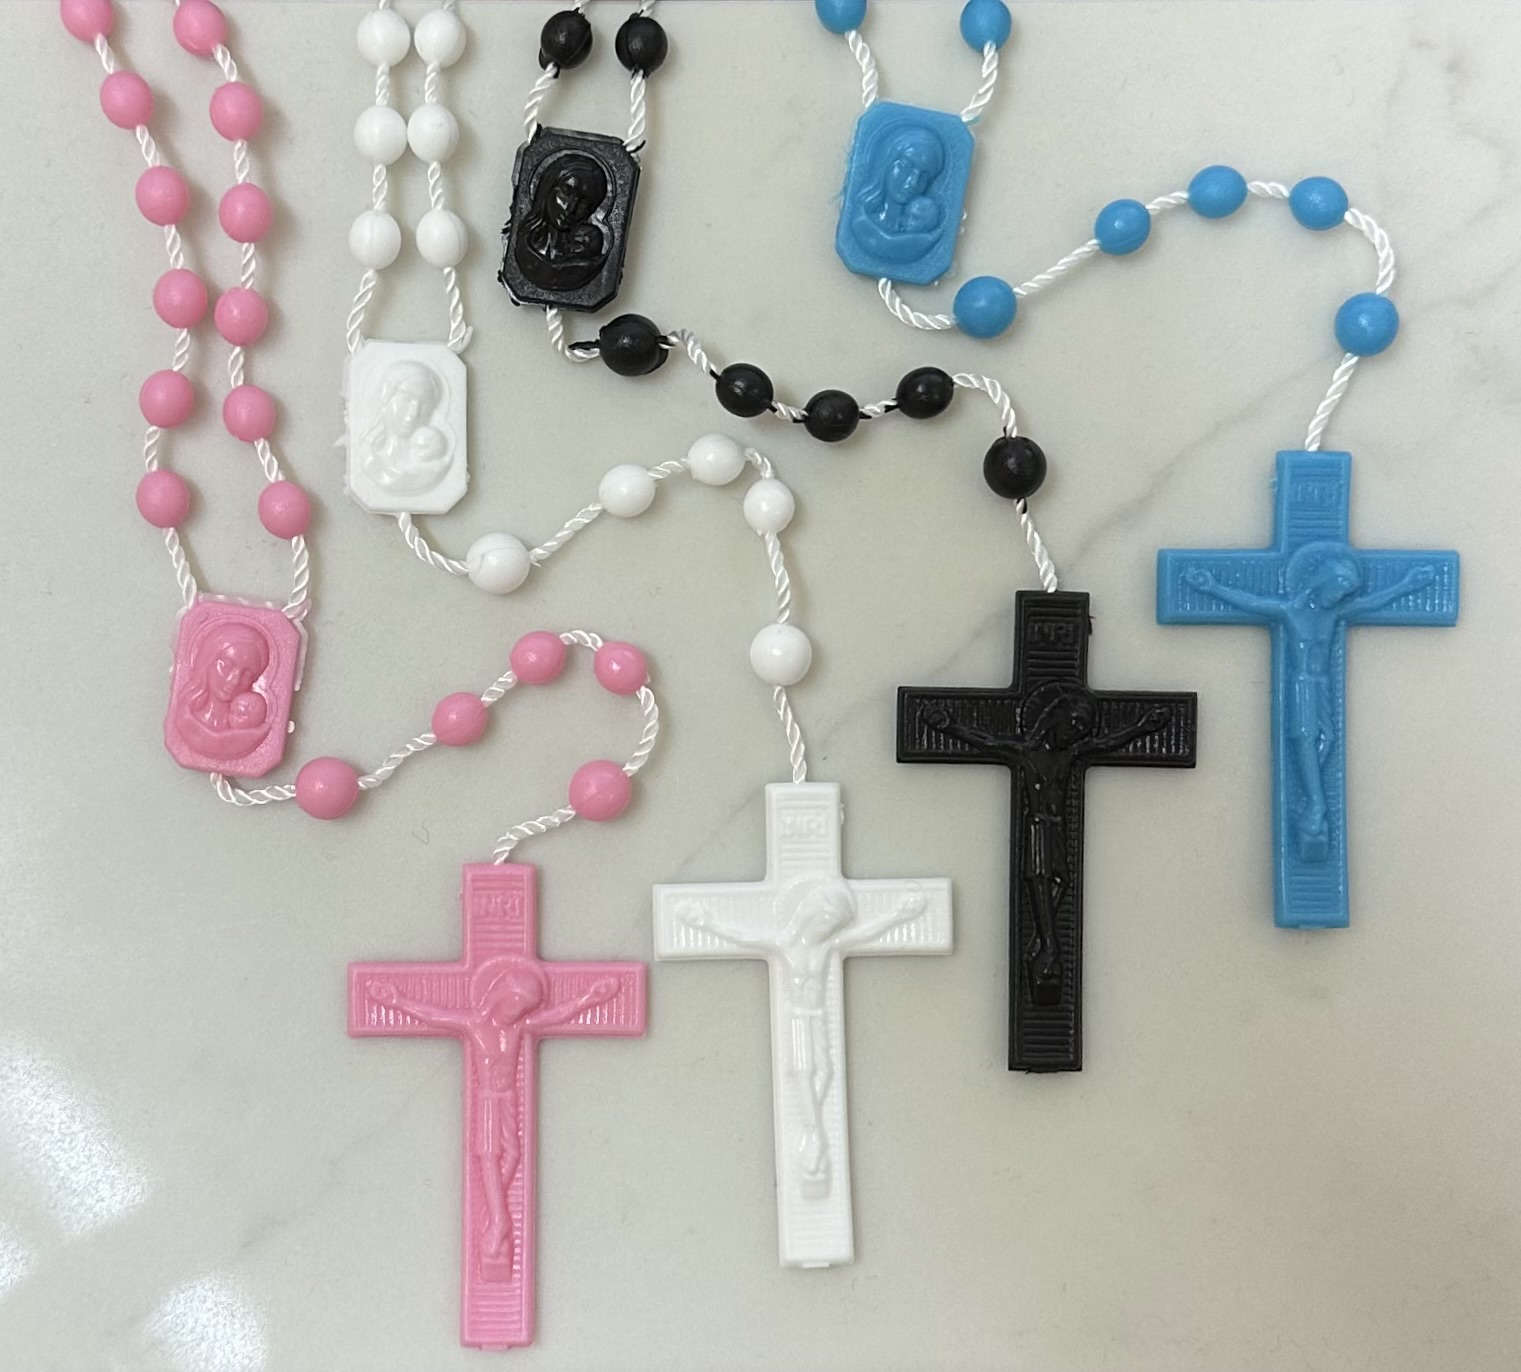 Rosary Prayer Blanket - Pink | worthy of Agape | Catholic Goods